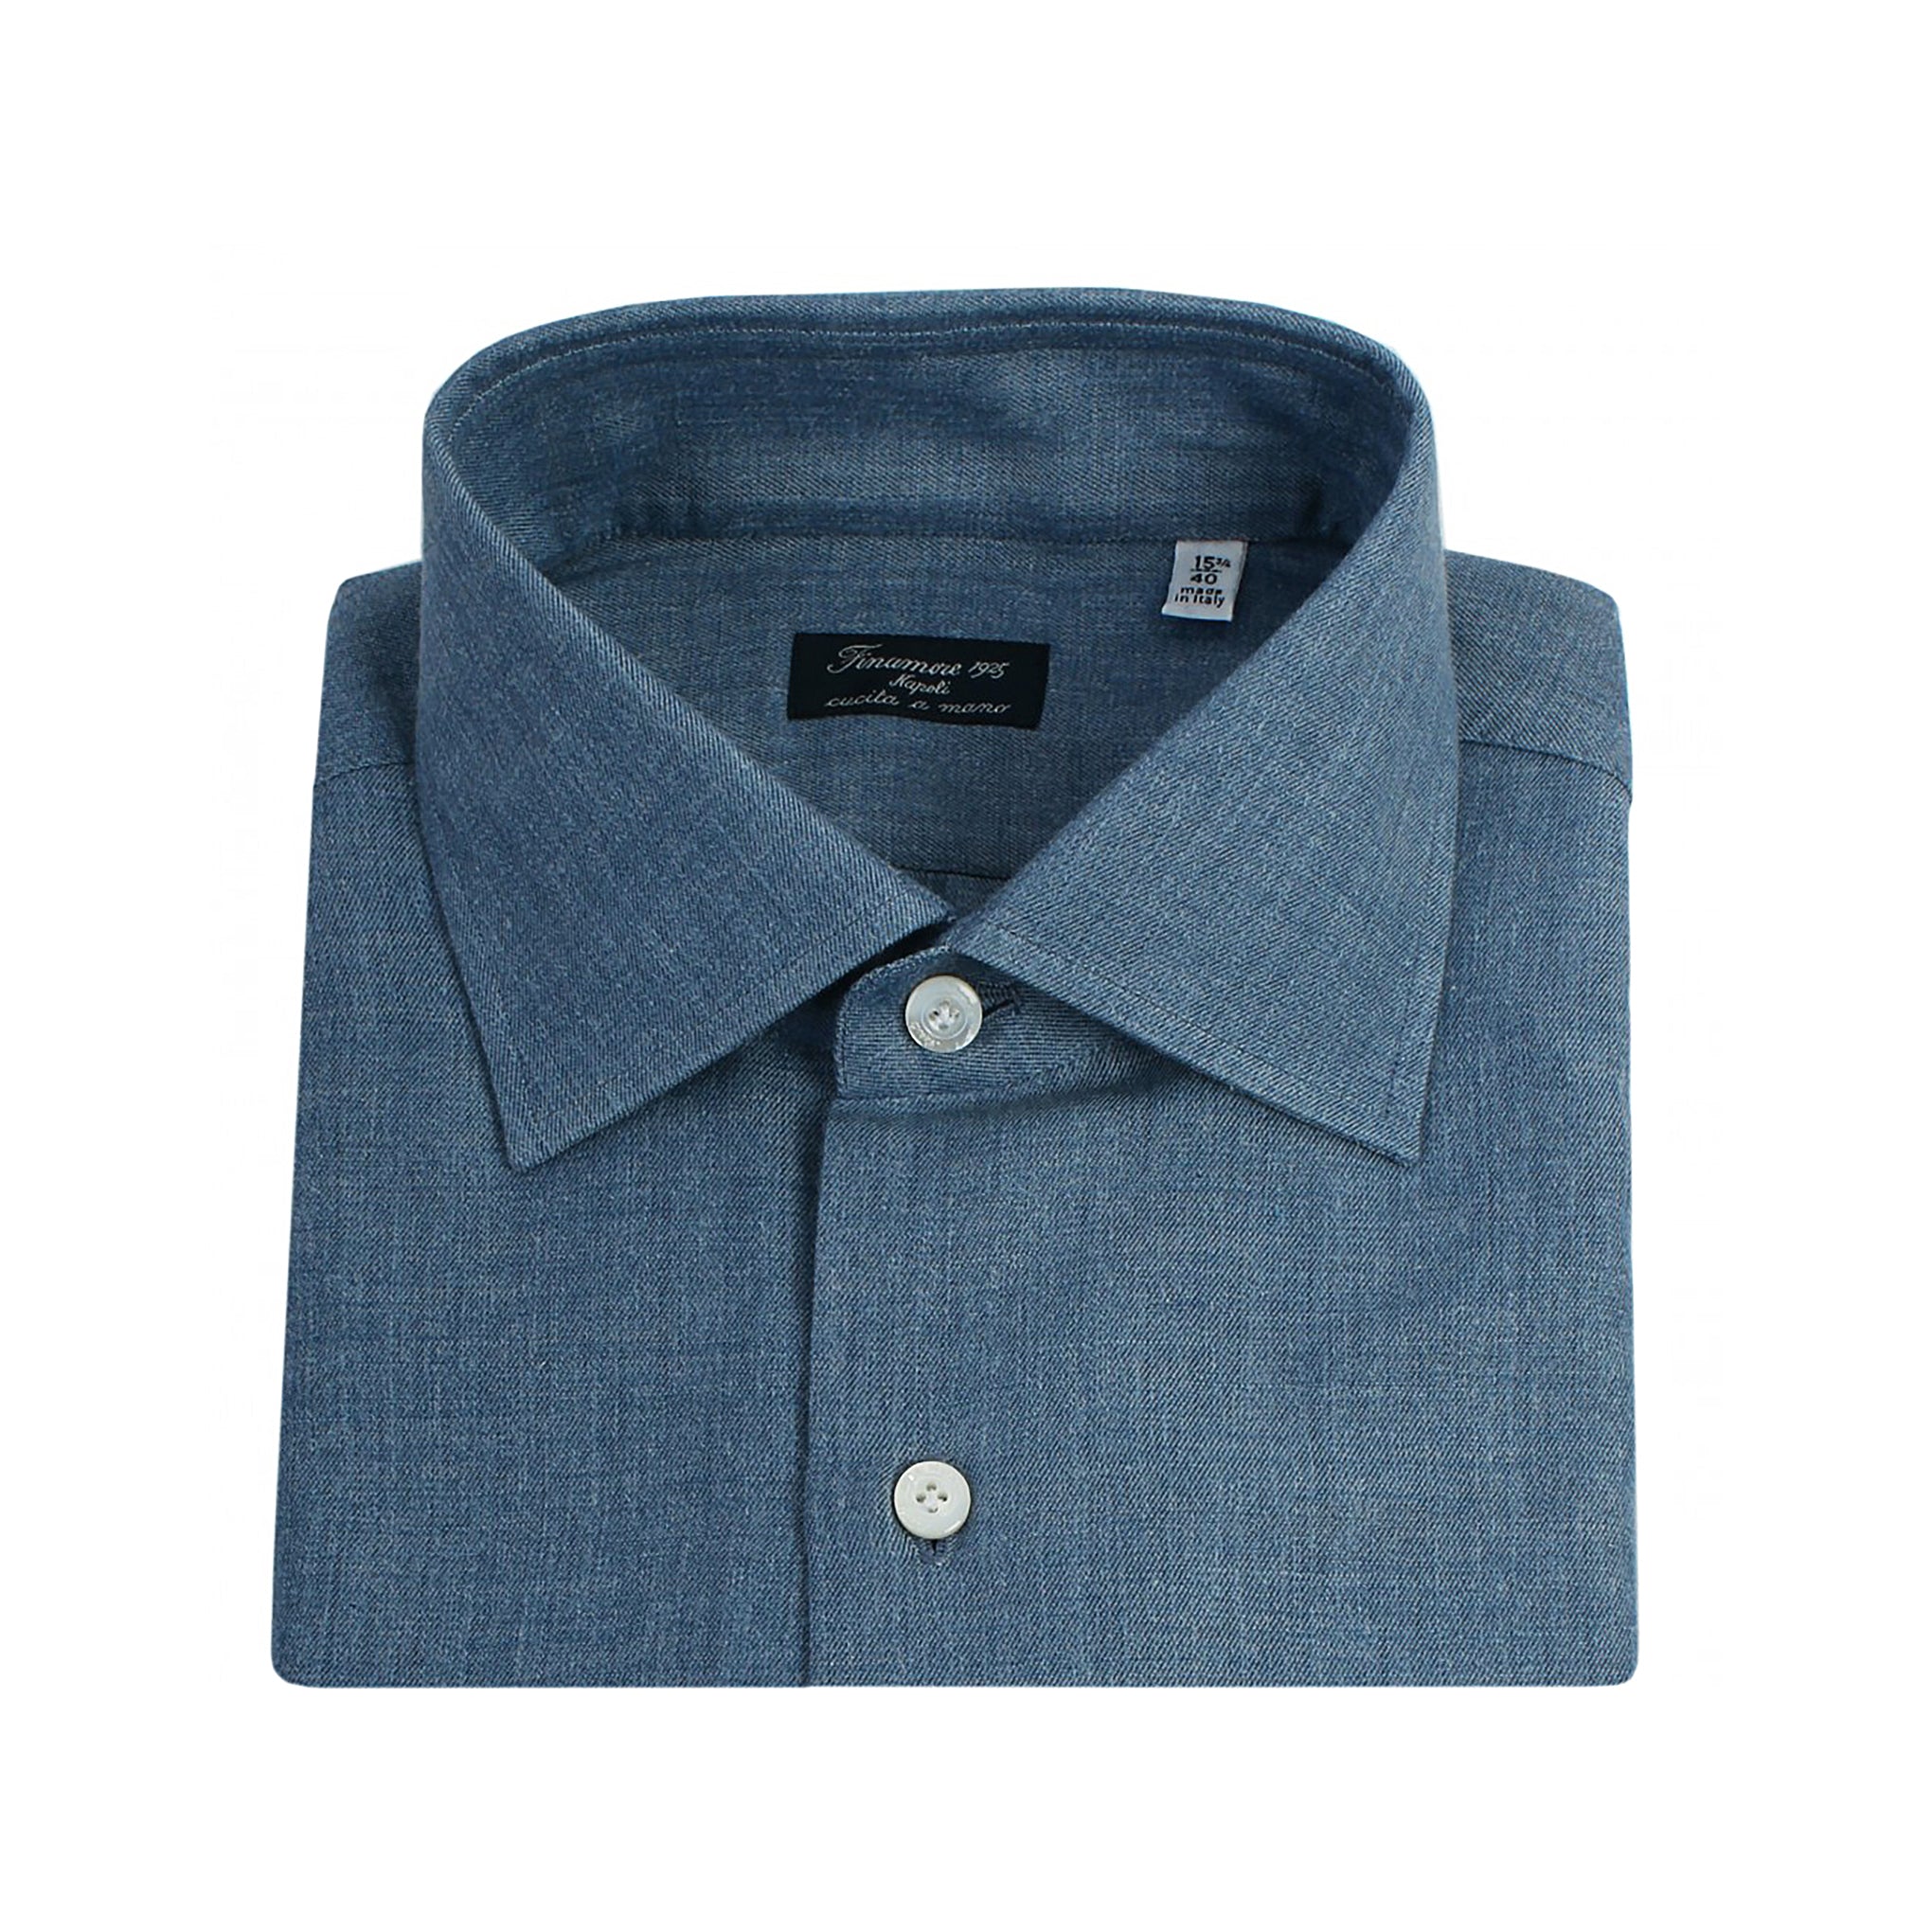 Shirt Napoli dress regular cashmere cotton blue Finamore 1925